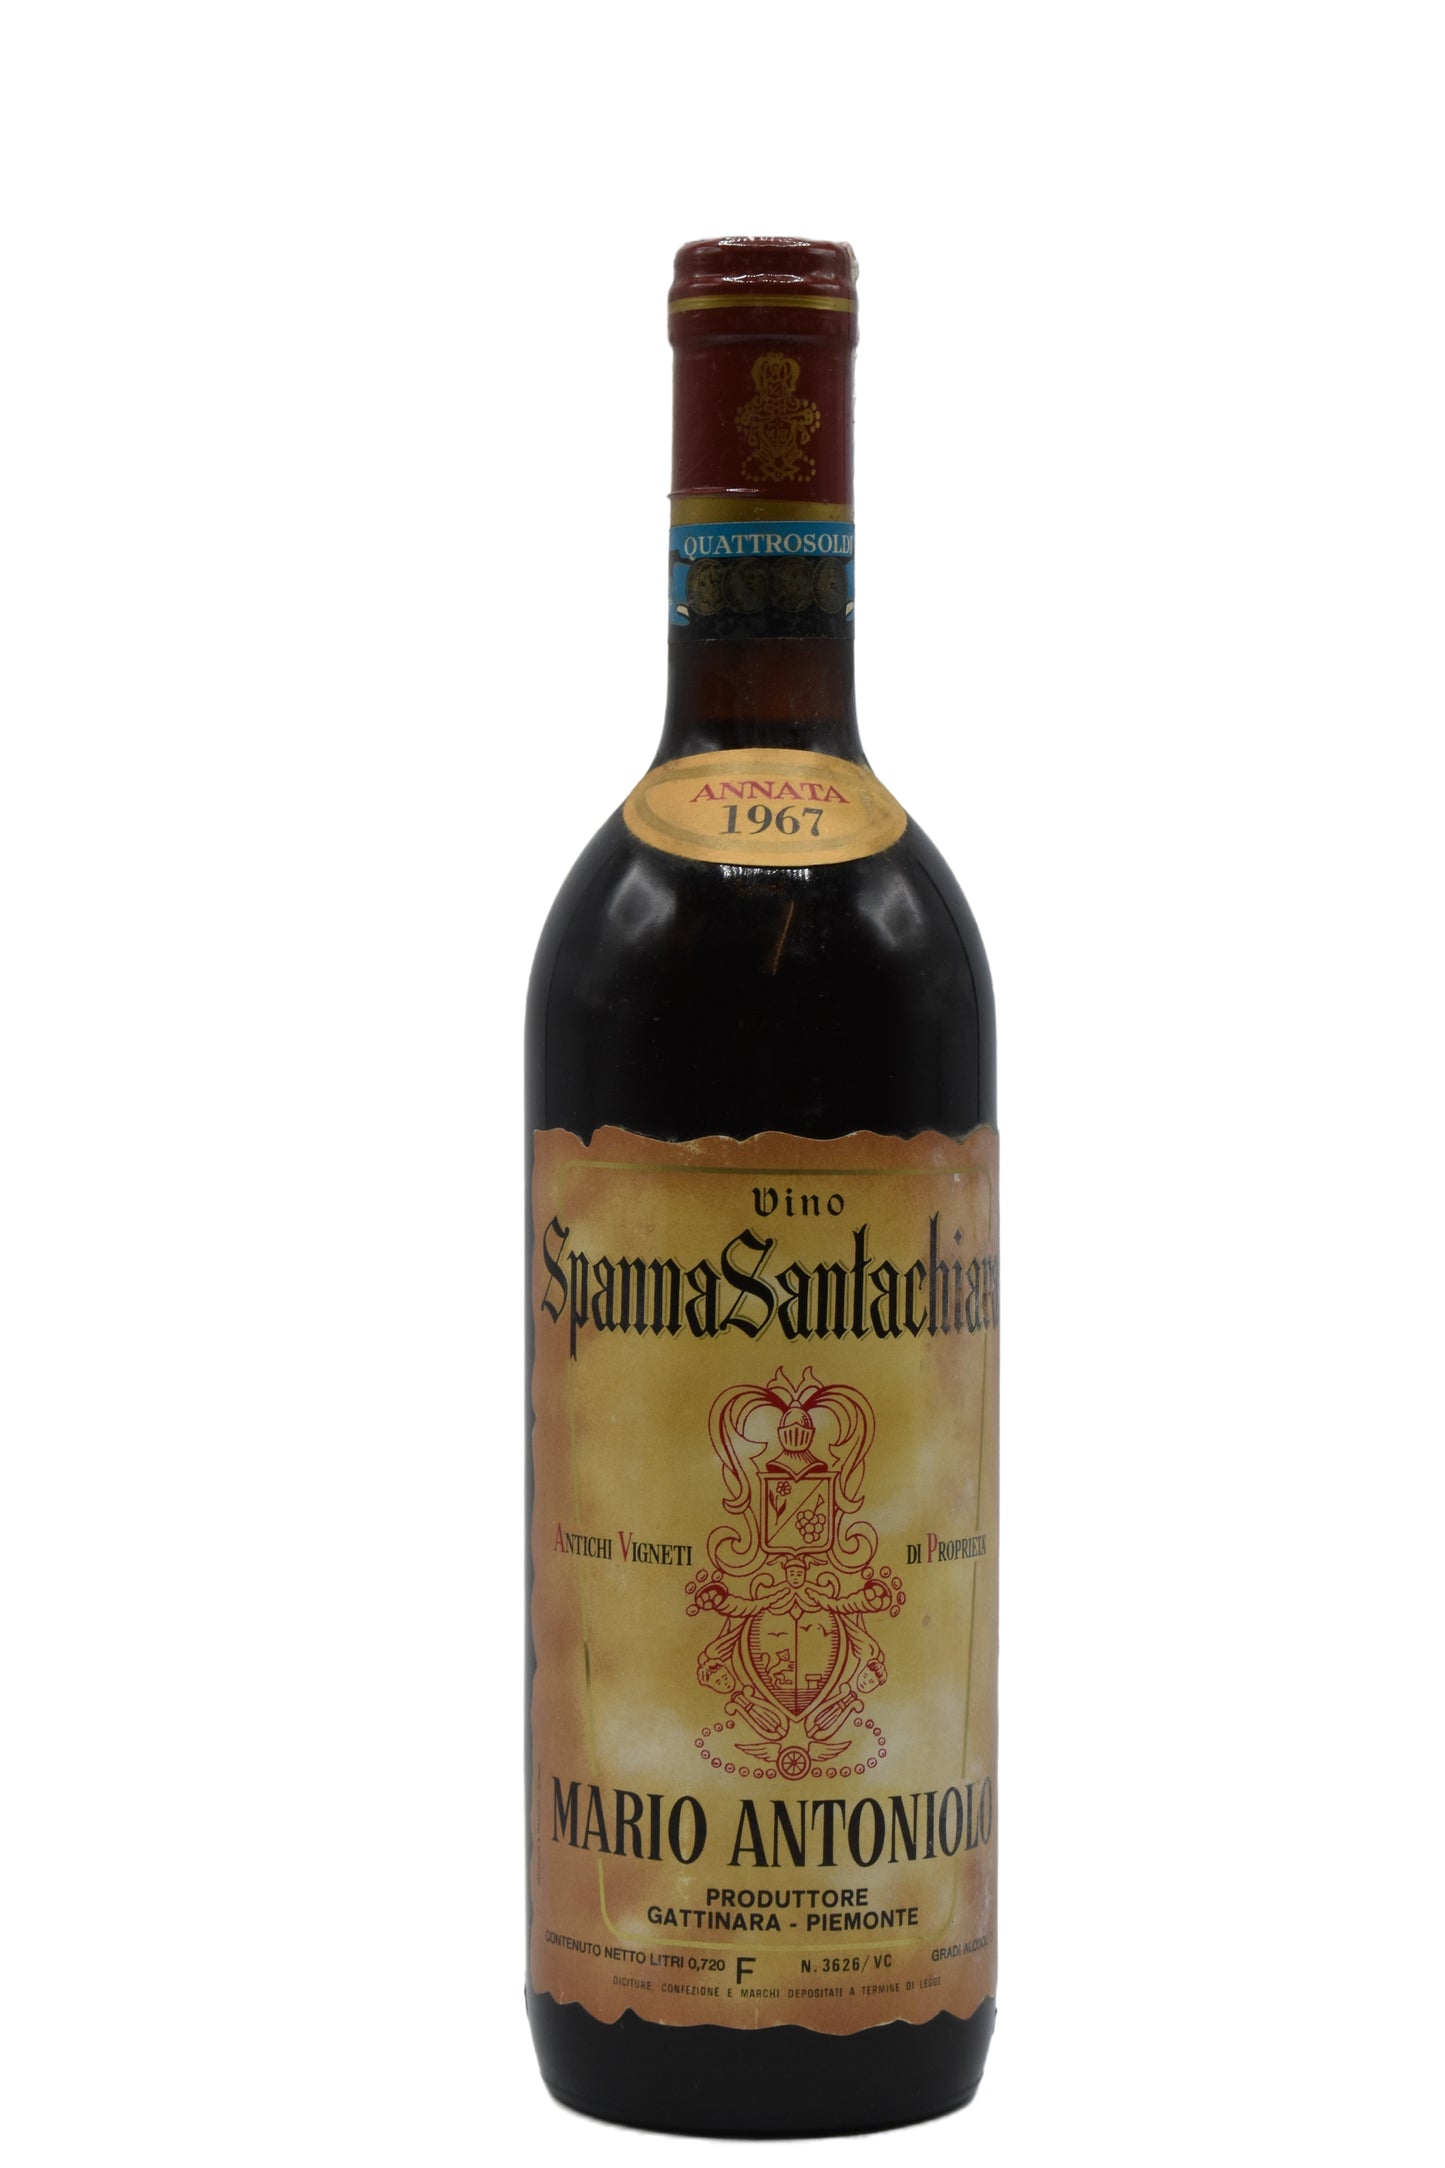 1967 Antoniolo, Spanna Santachiara Riserva Speciale 750ml - Walker Wine Co.